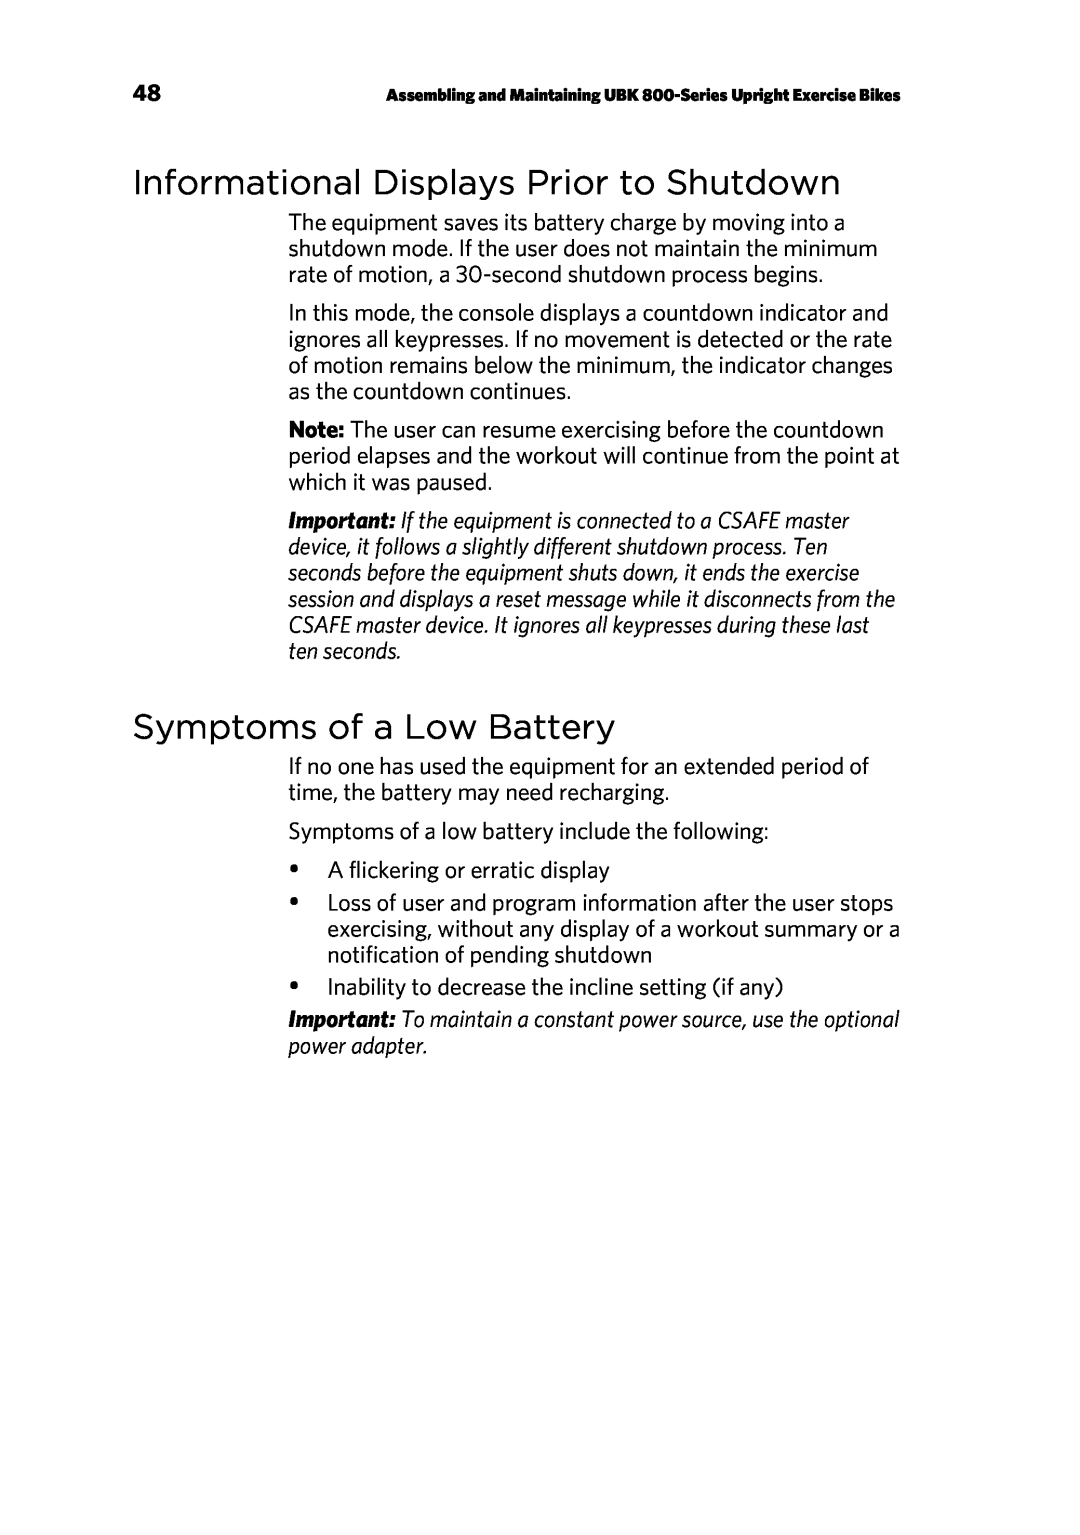 Precor P30 manual Informational Displays Prior to Shutdown, Symptoms of a Low Battery 